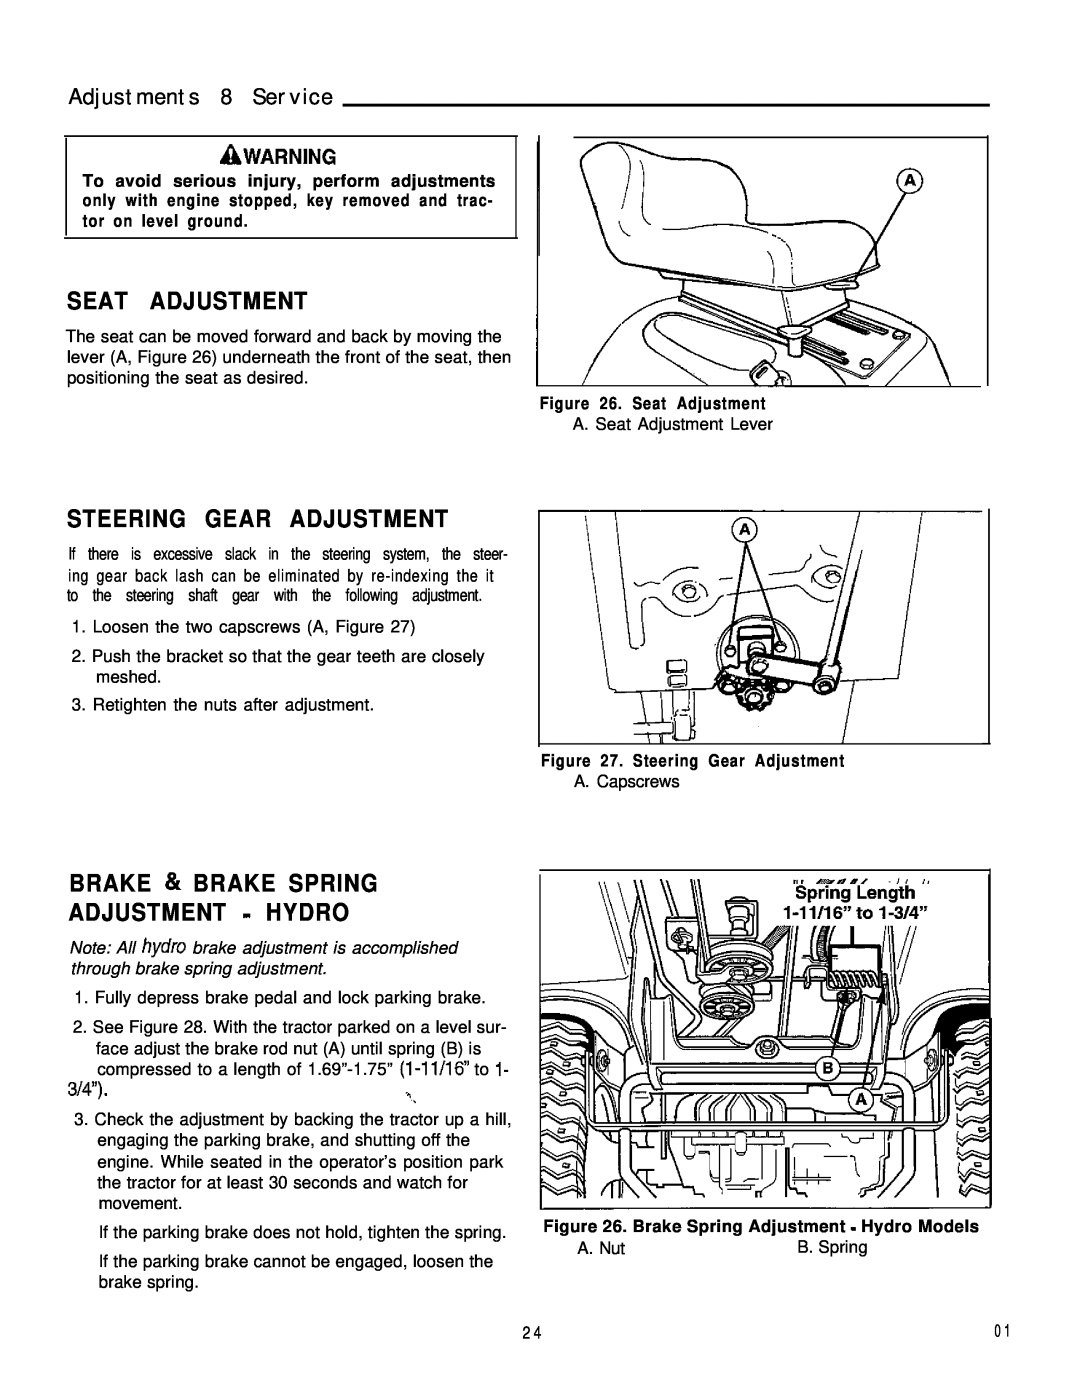 Simplicity 1693266, 1693264 manual Adjustments 8 Service, Awarning, Seat Adjustment, Steering Gear Adjustment 